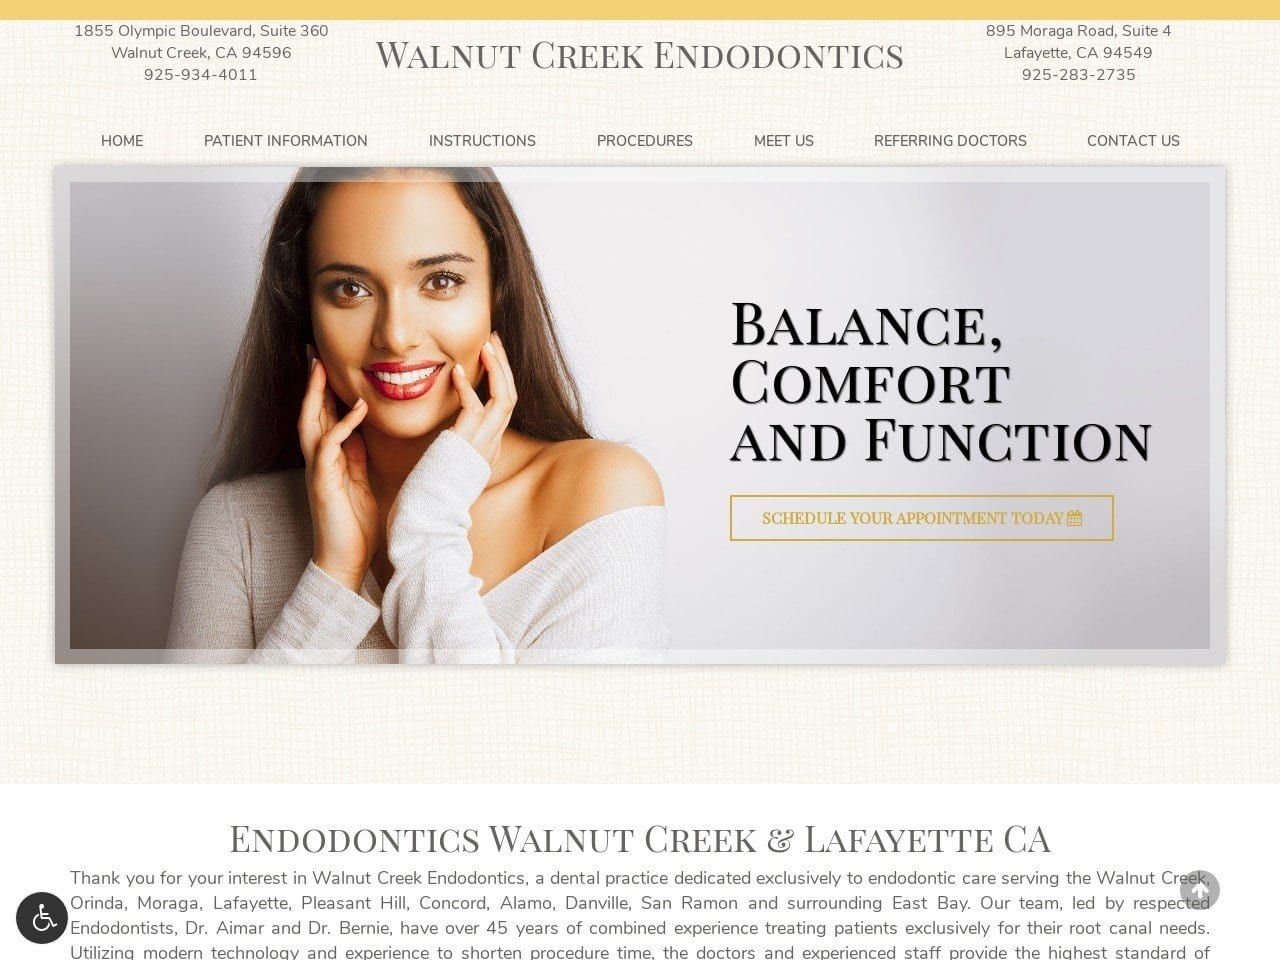 Walnut Creek Endodontics Website Screenshot from walnutcreekendodontics.com